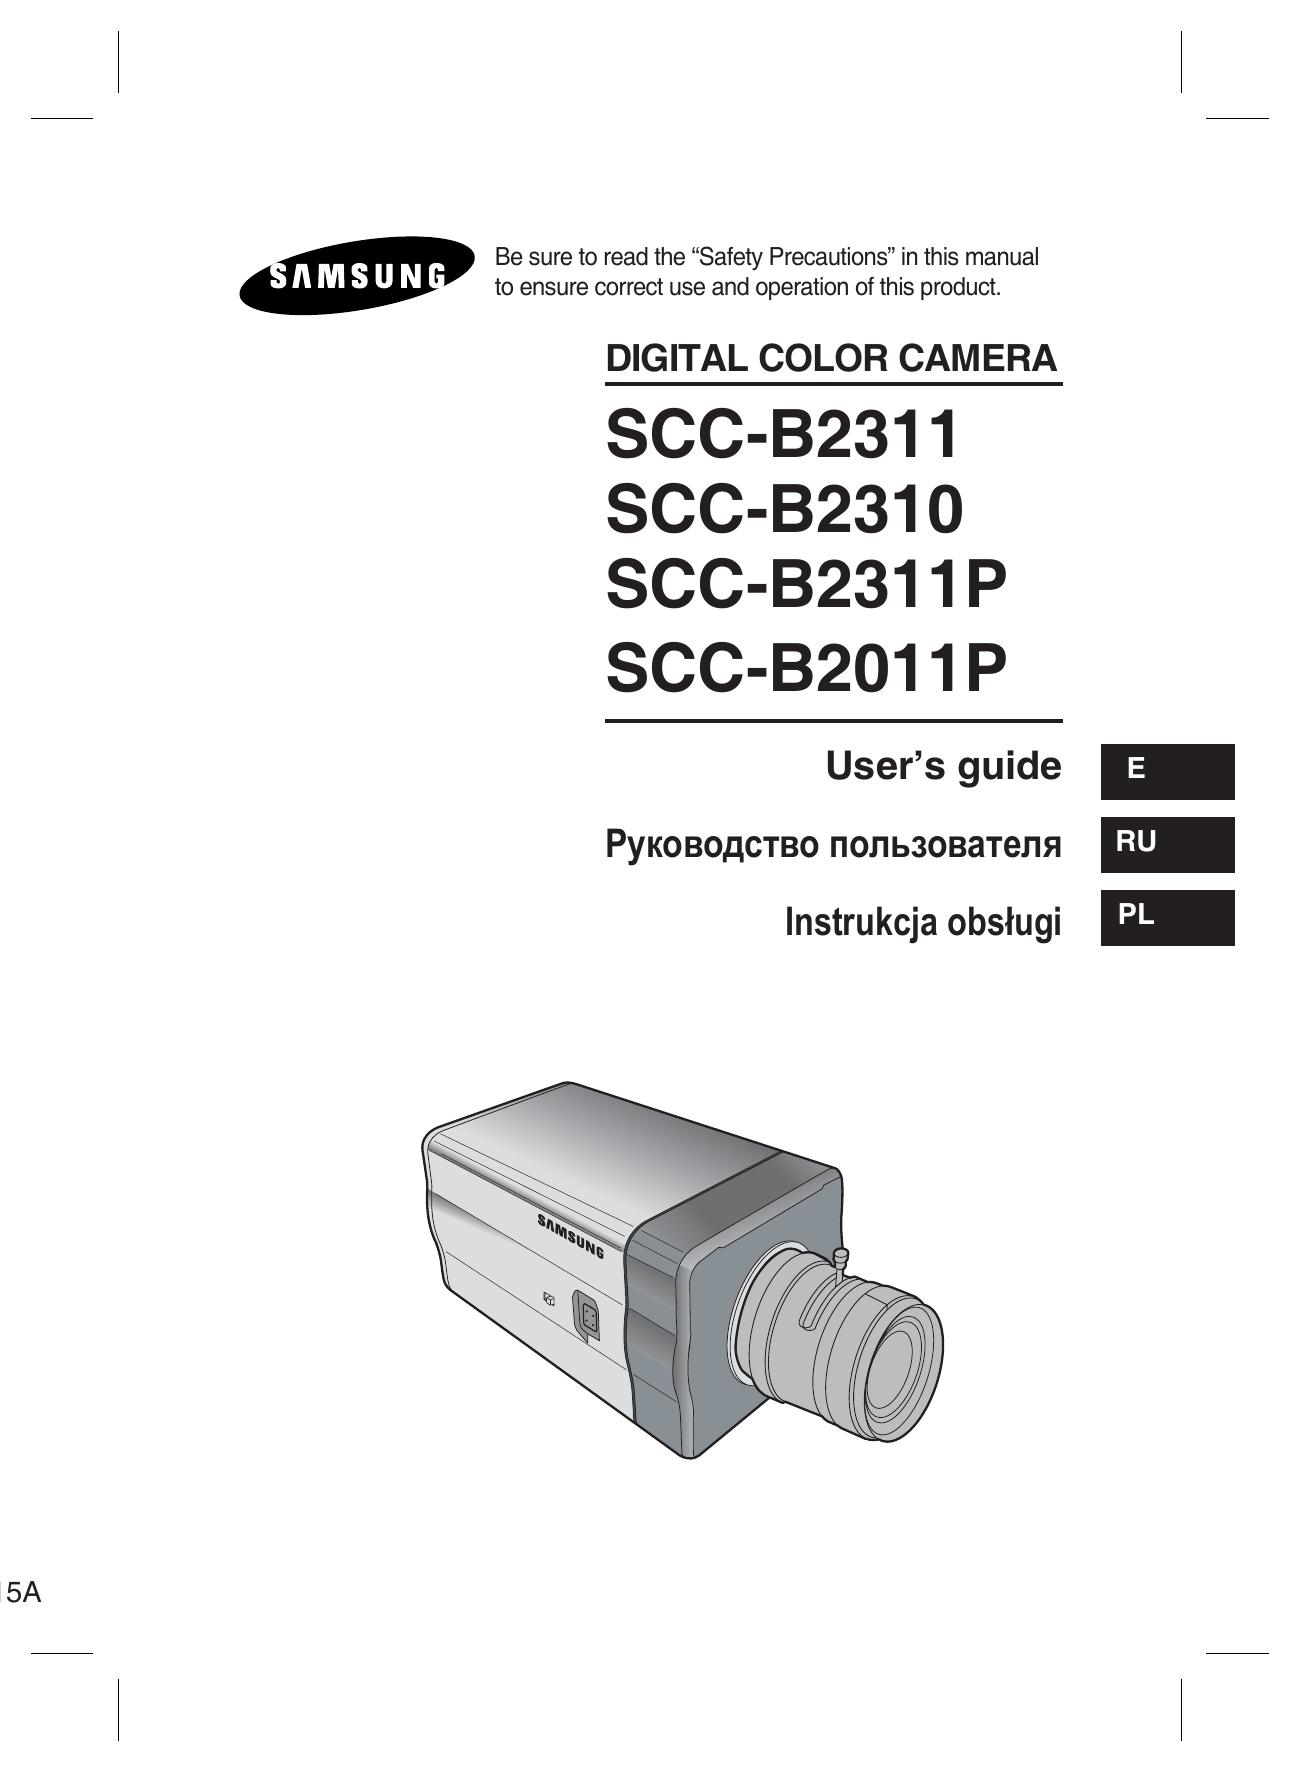 Samsung SCC-B2011P Security Camera User Manual